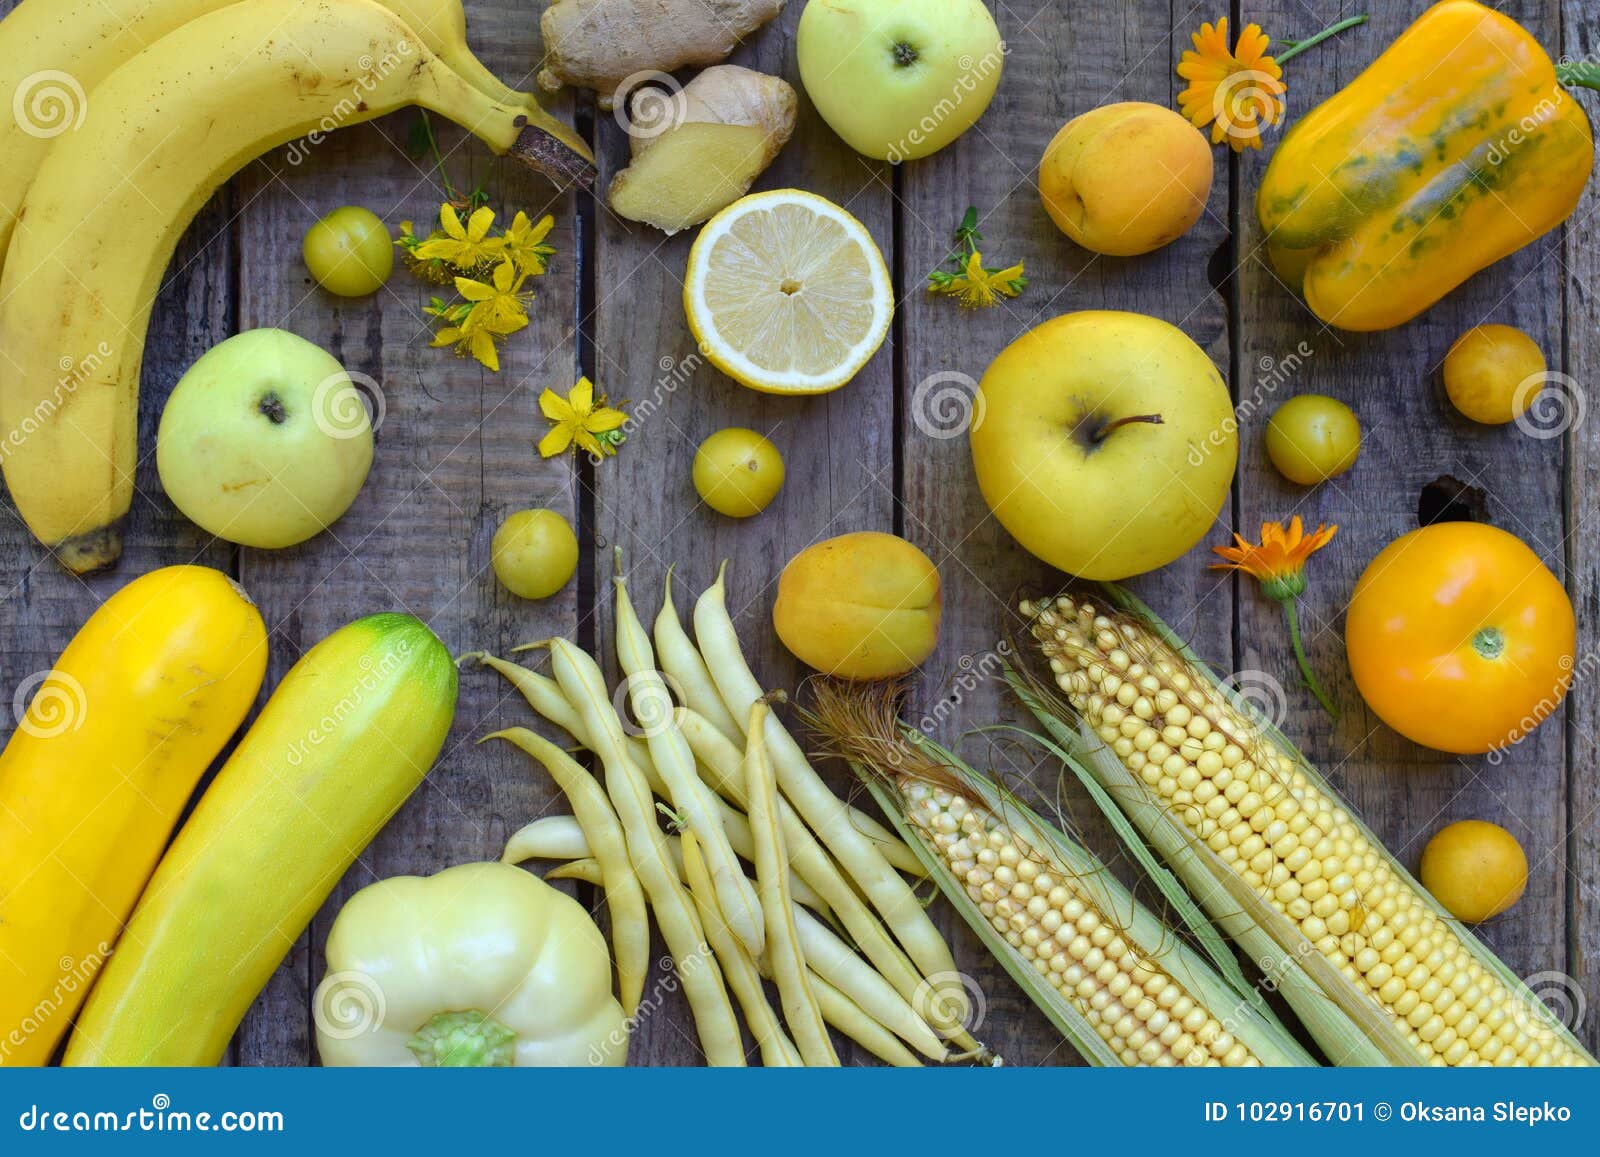 Composition Of Yellow Vegetables And Fruits - Banana, Corn, Lemon, Plum ...